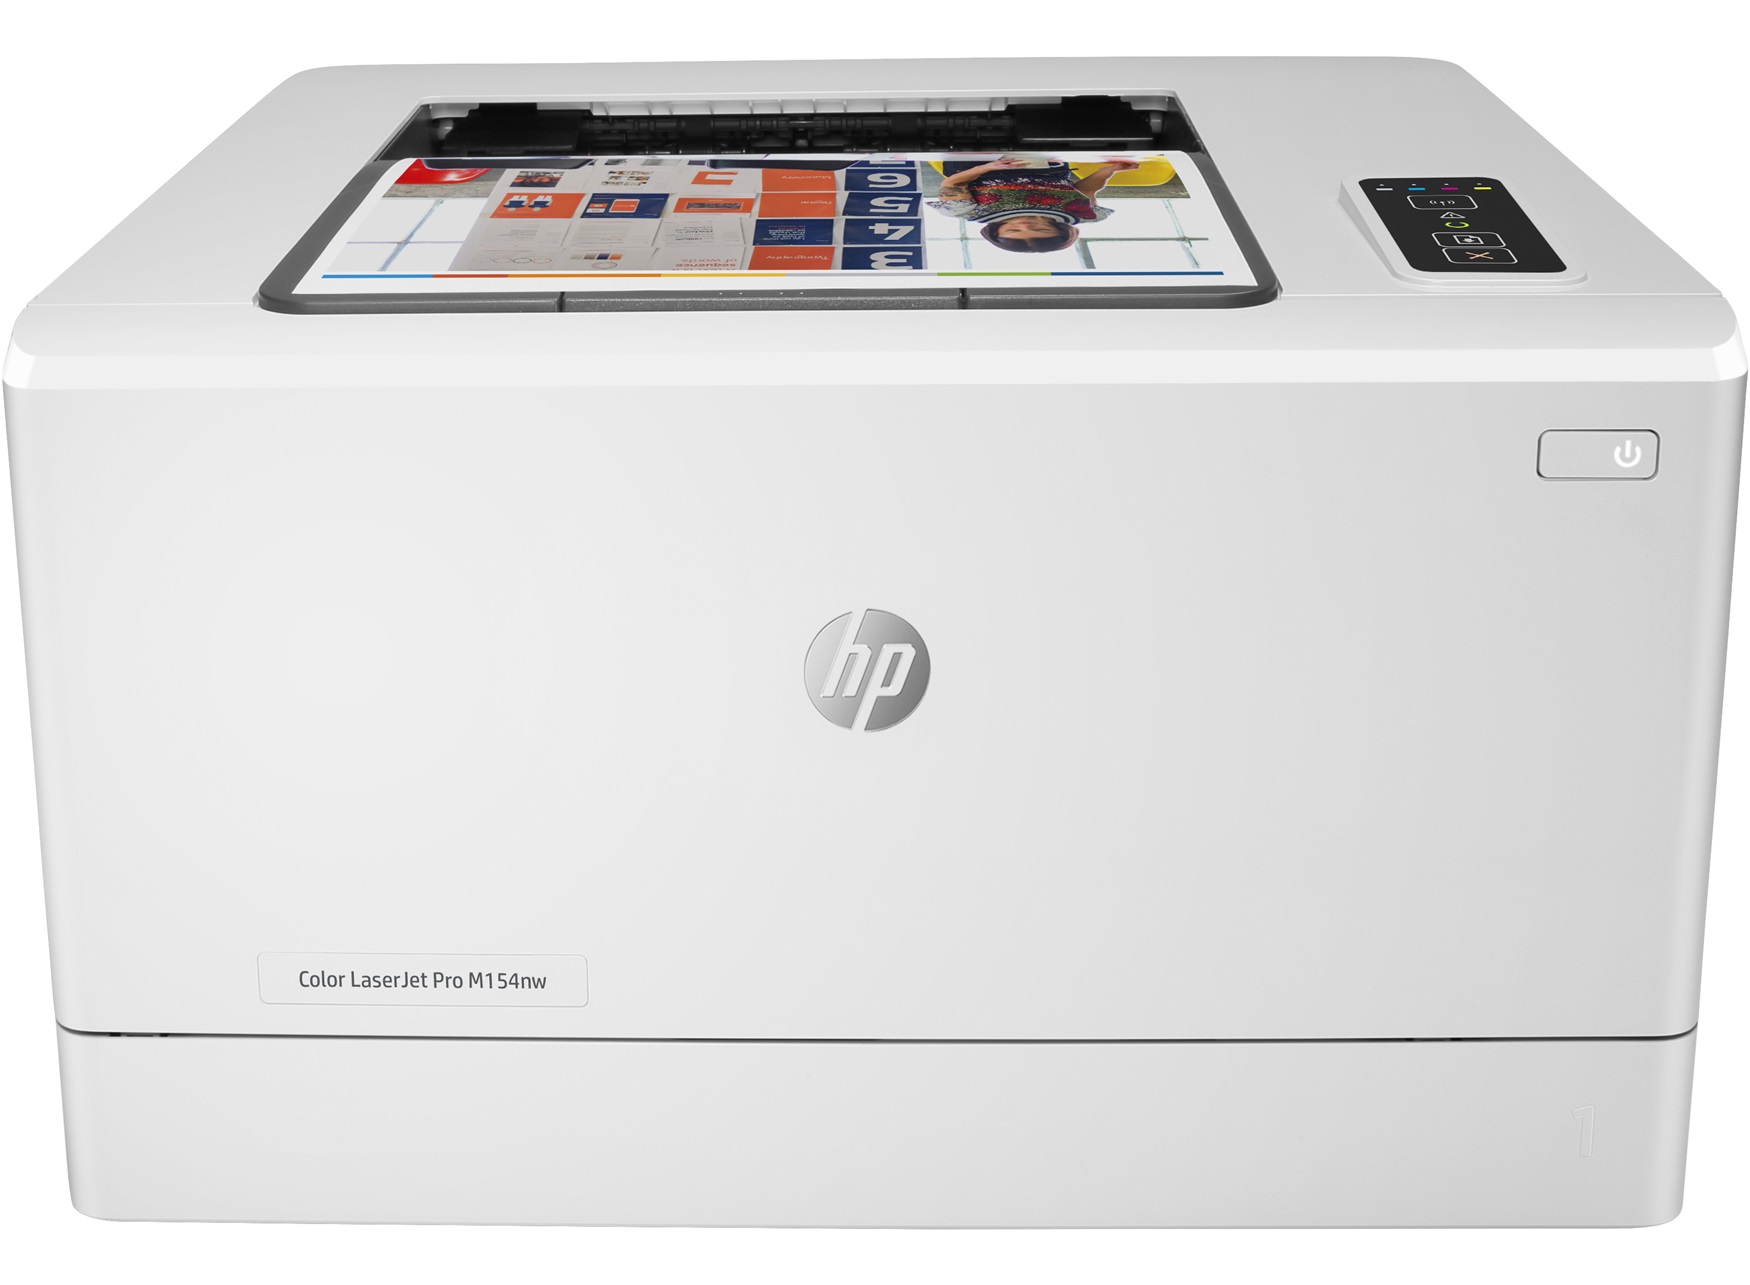 Máy in HP Color LaserJet Pro M154nw 